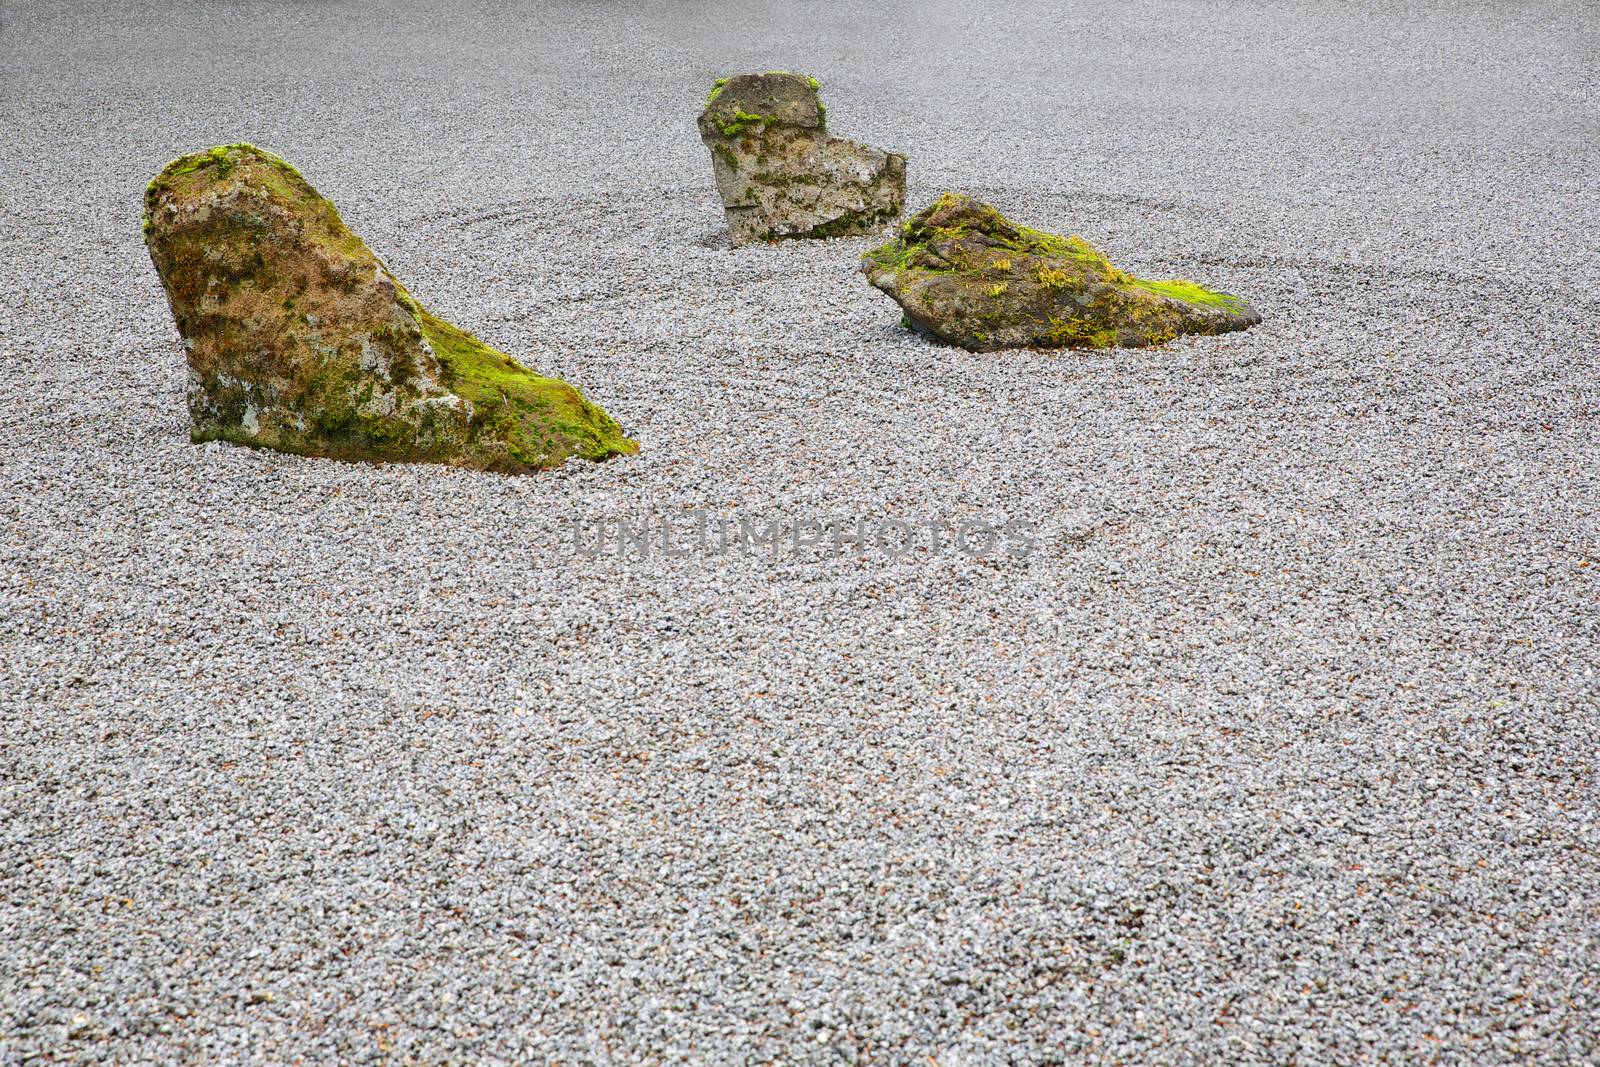 Moss covered Zen Rock Garden with three rocks